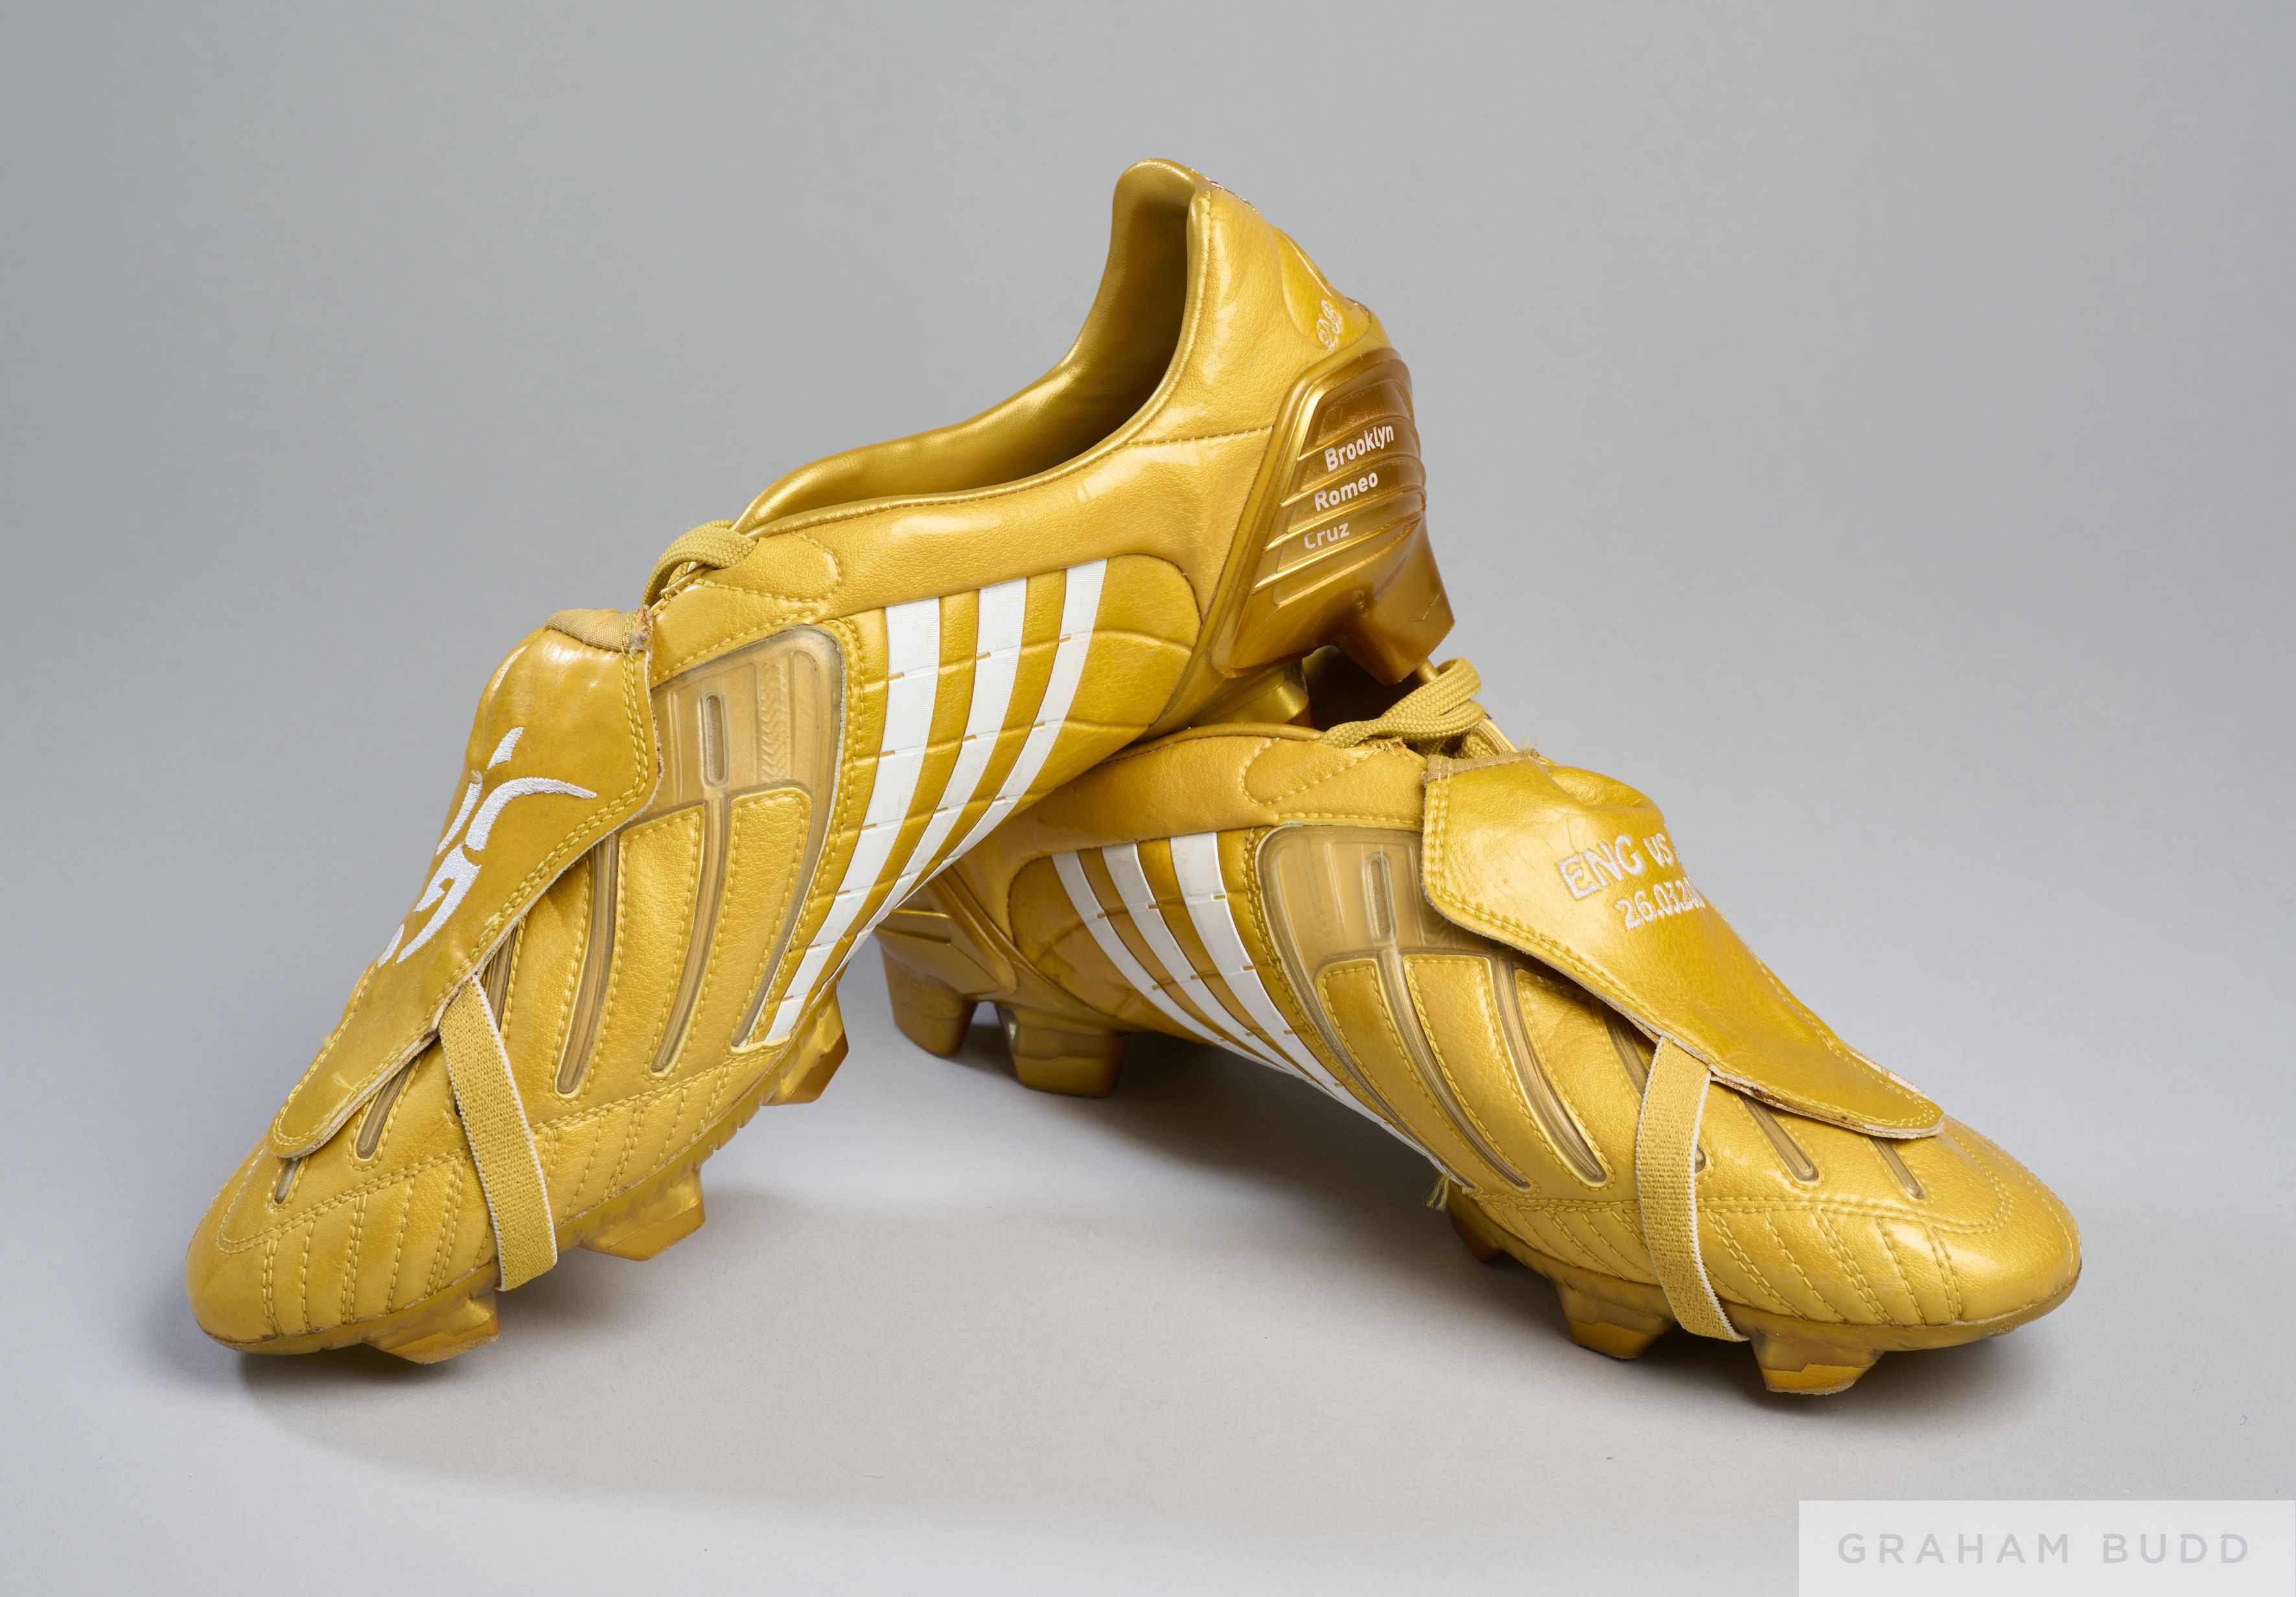 David Beckham pair of gold Adidas 2008 Predator football boots